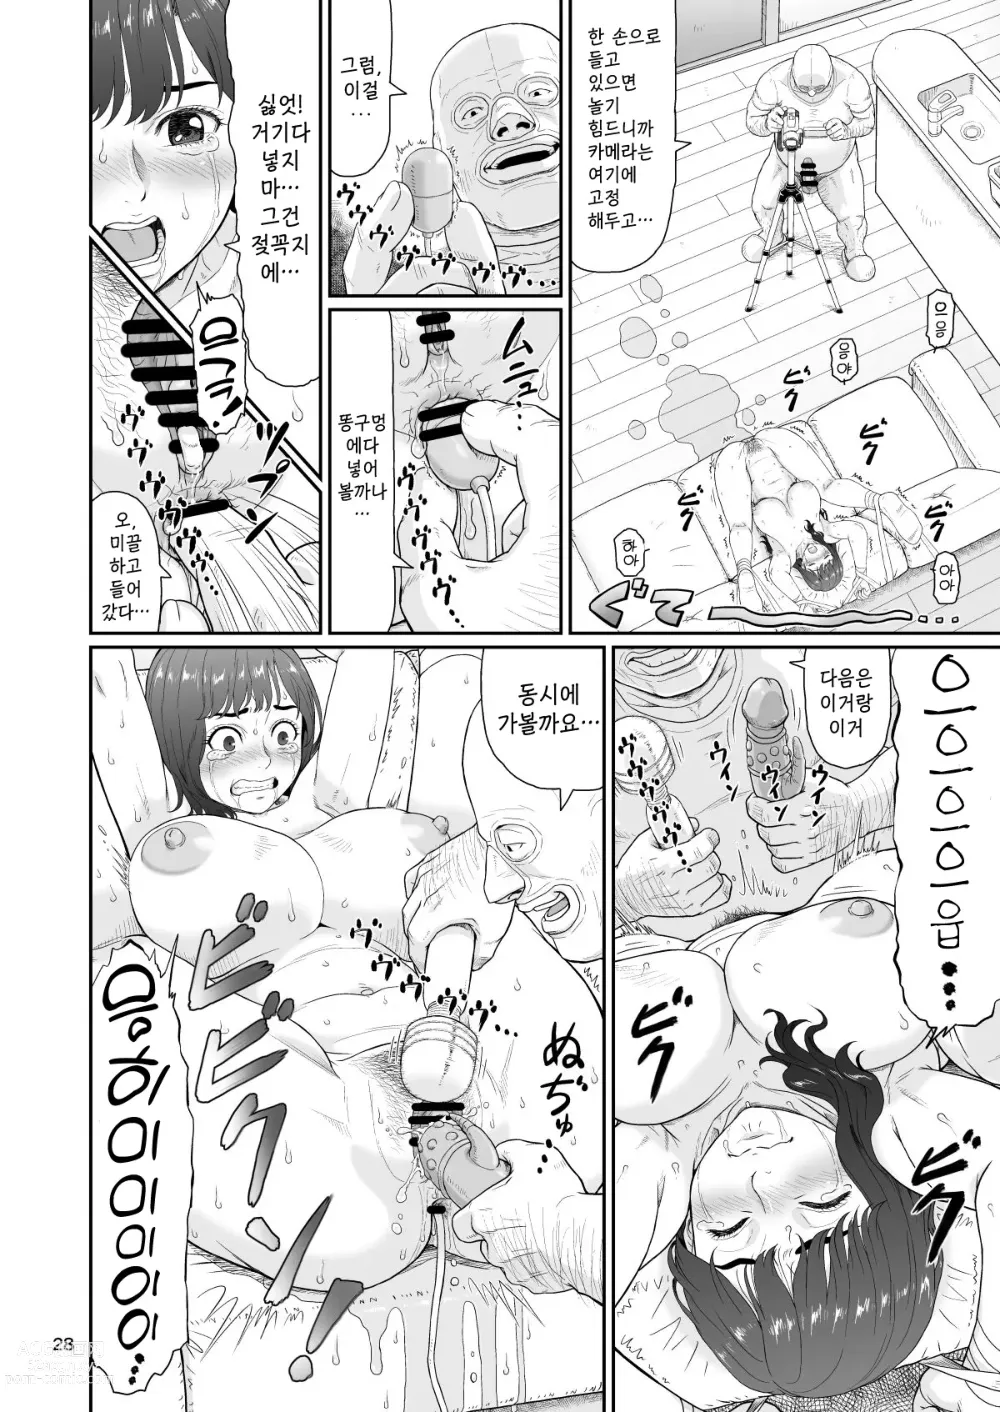 Page 28 of doujinshi 야한 짓 이외에 시간을 멈춰선 안된다구요 2